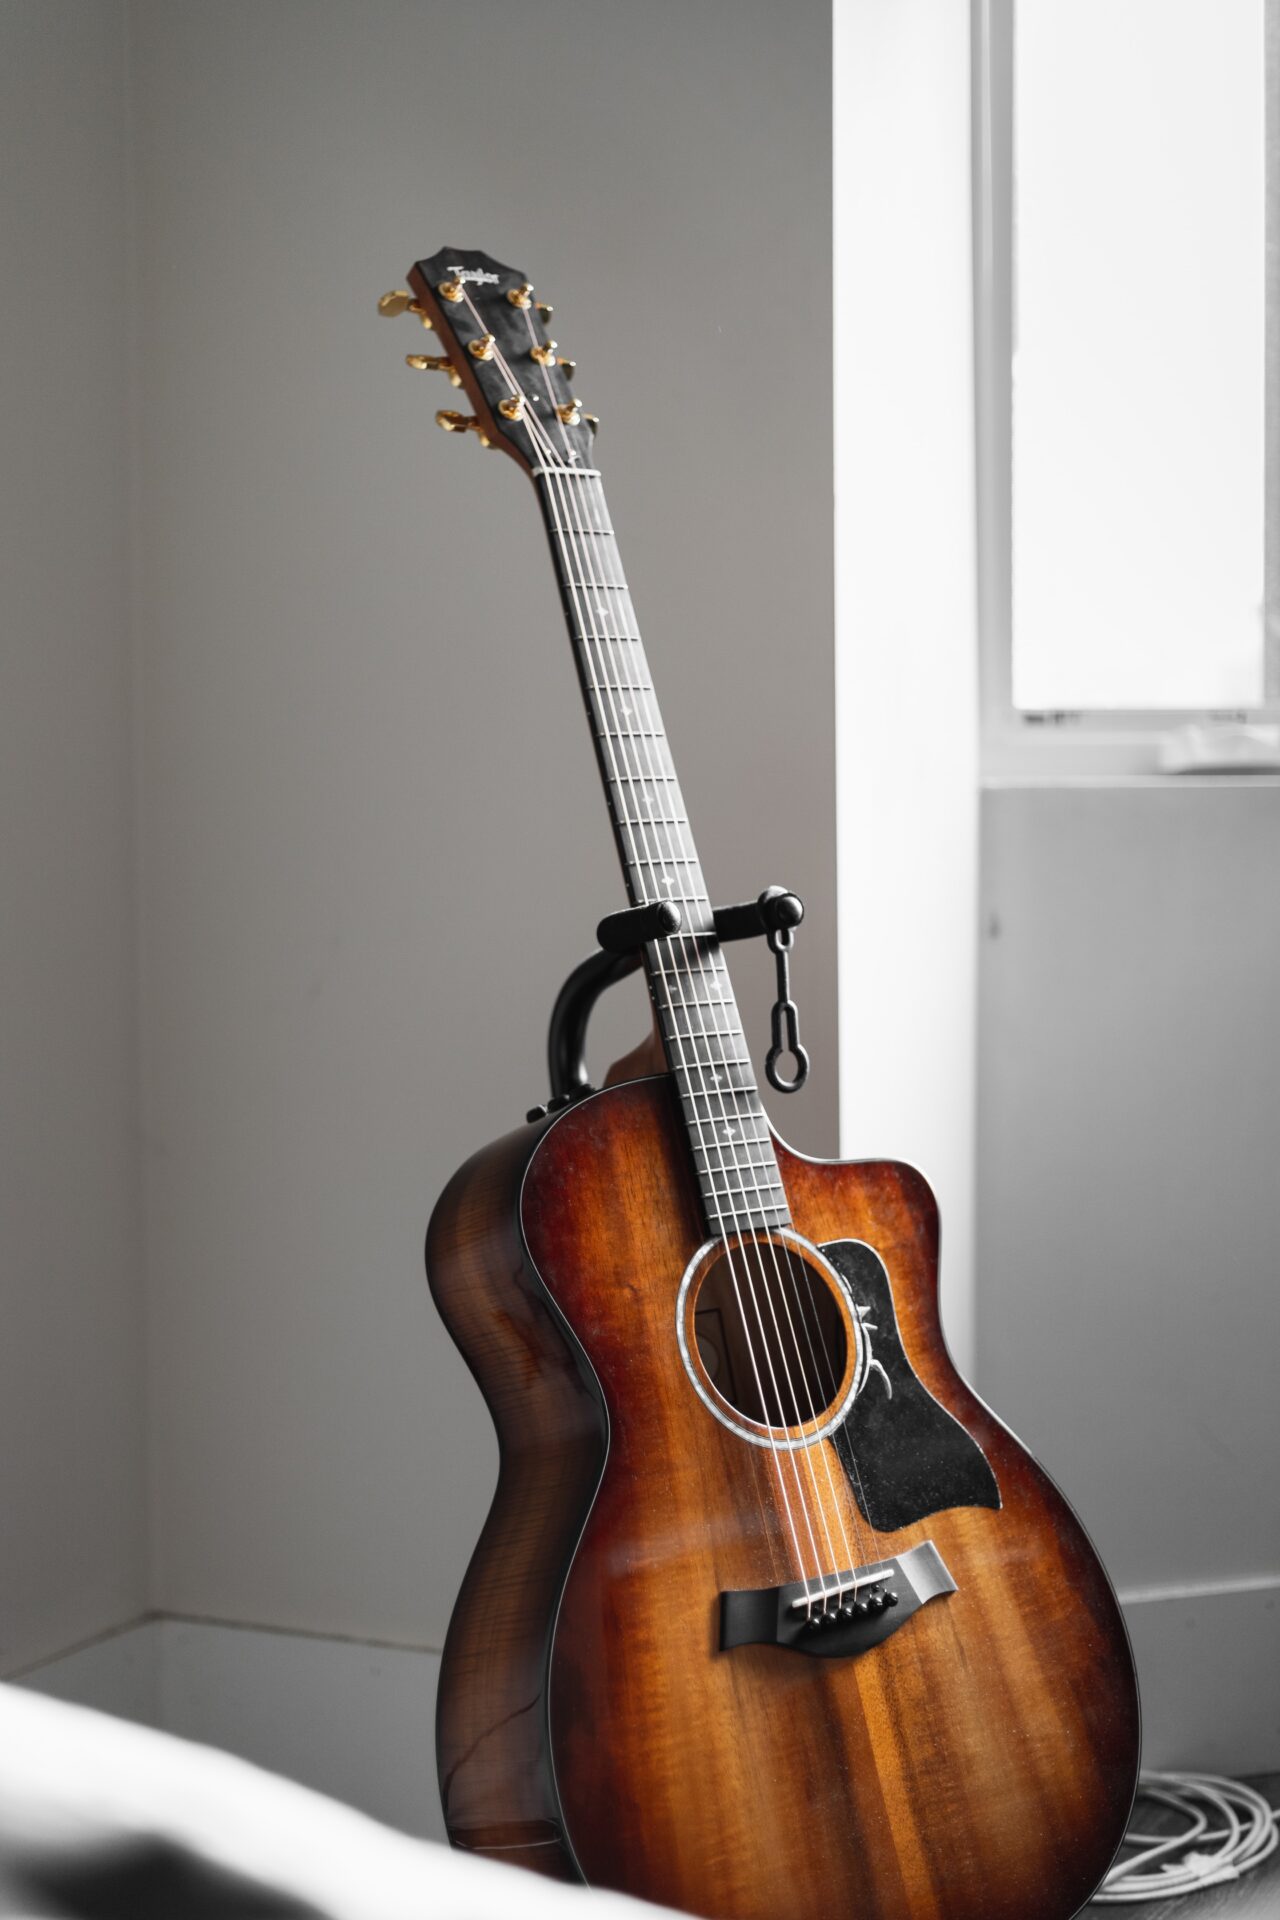 sun bust guitar, placed near the window.